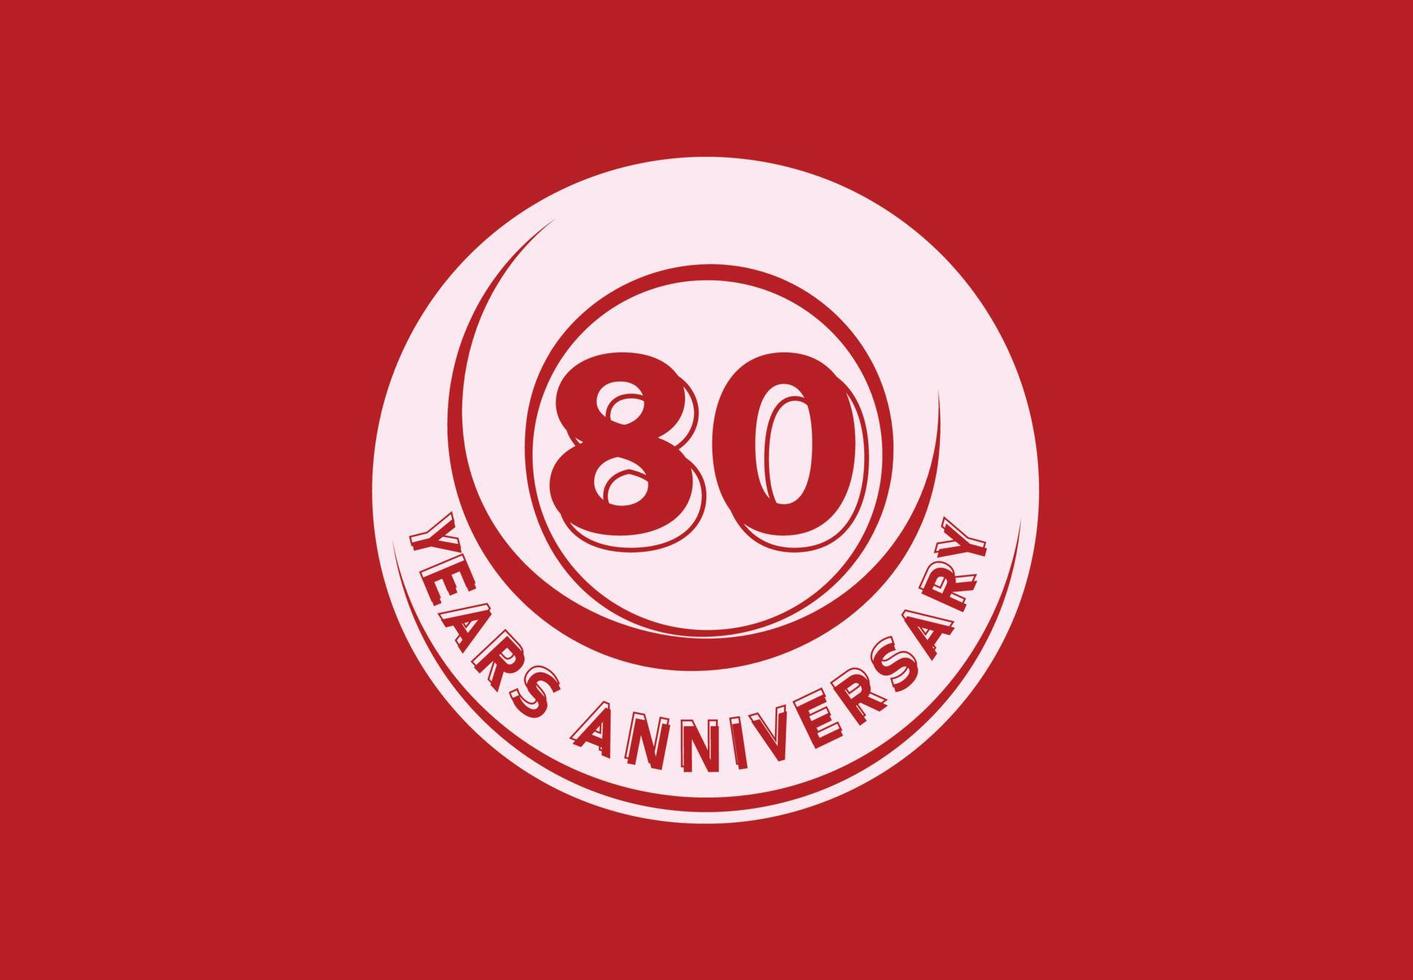 80 years anniversary logo and sticker design vector